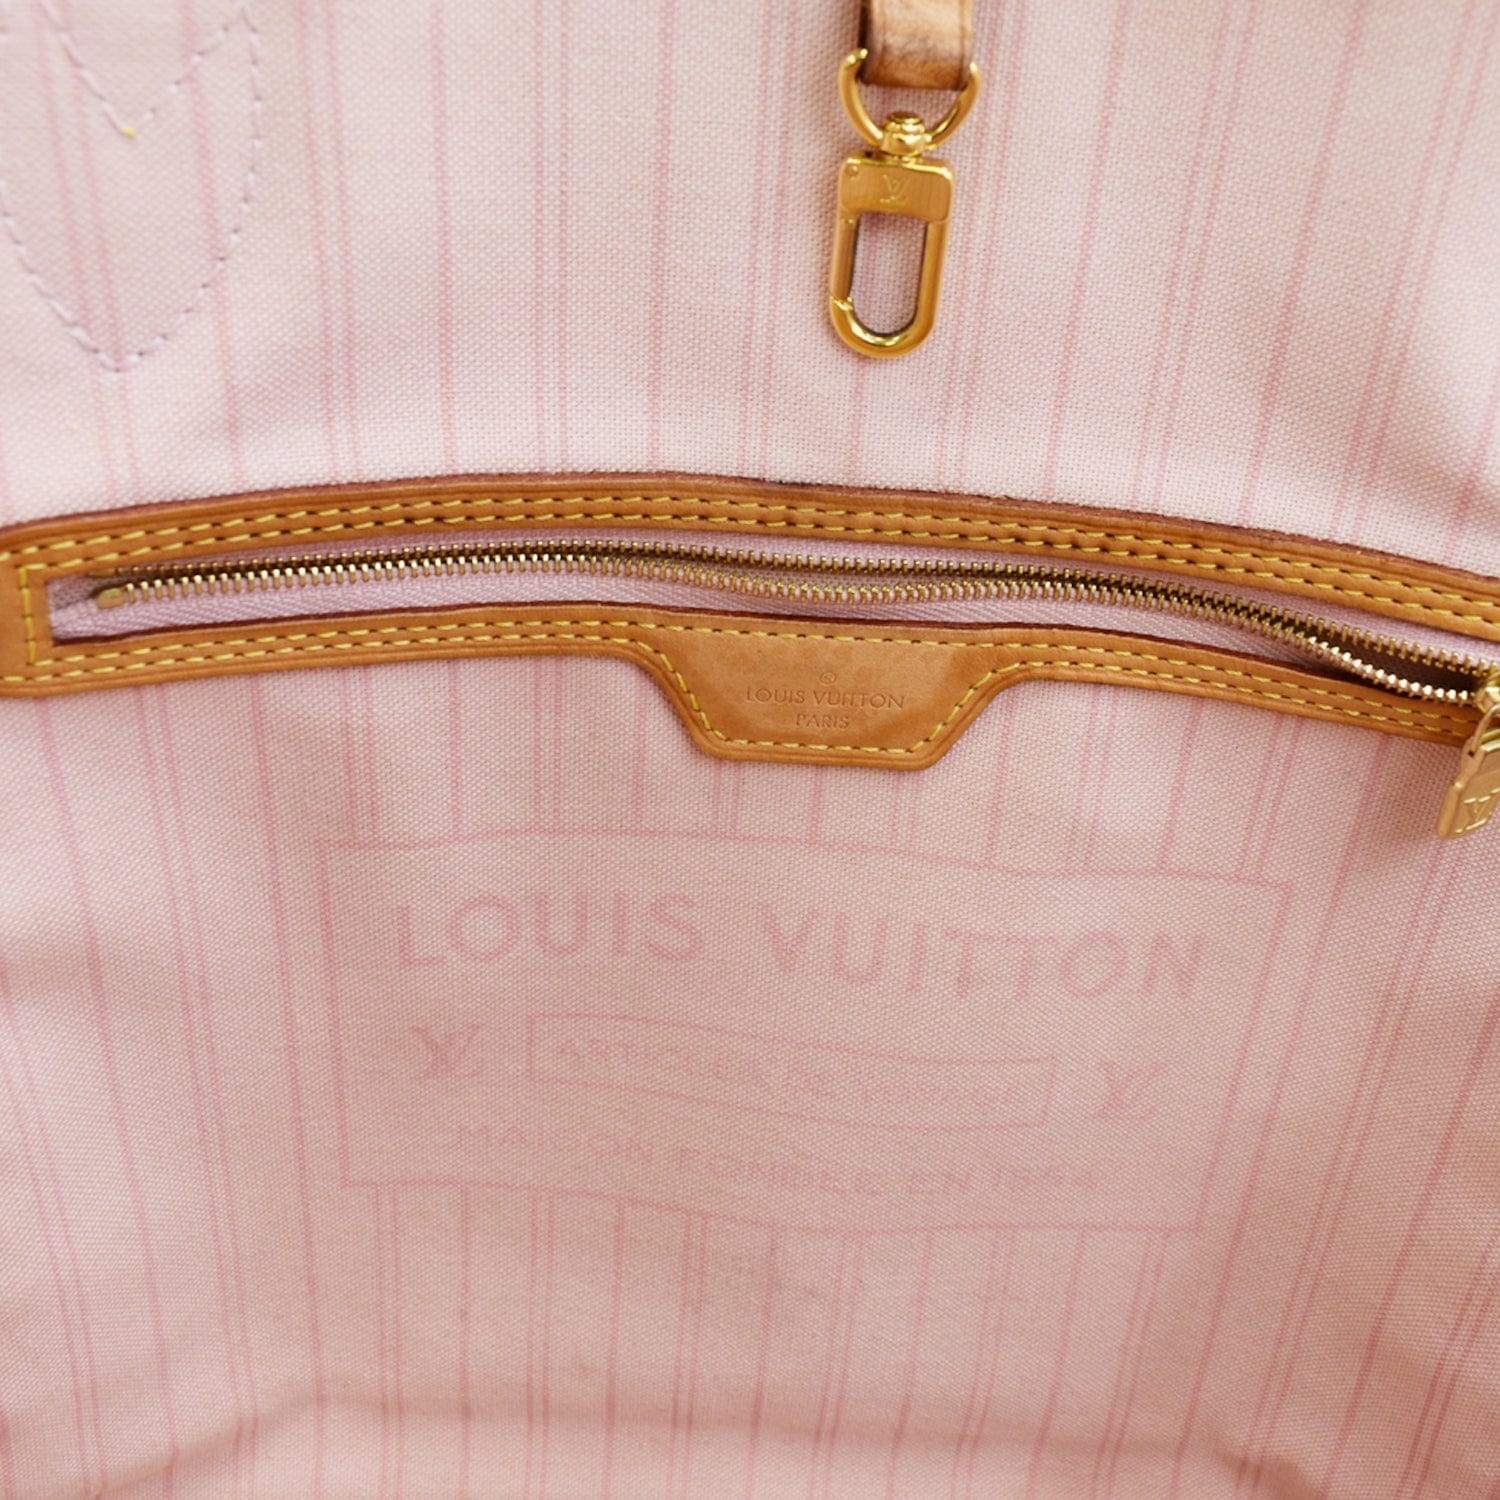 Louis Vuitton, Bags, Louis Vuitton Neverfull Mm Damier Azur White Pink  Inside Bags